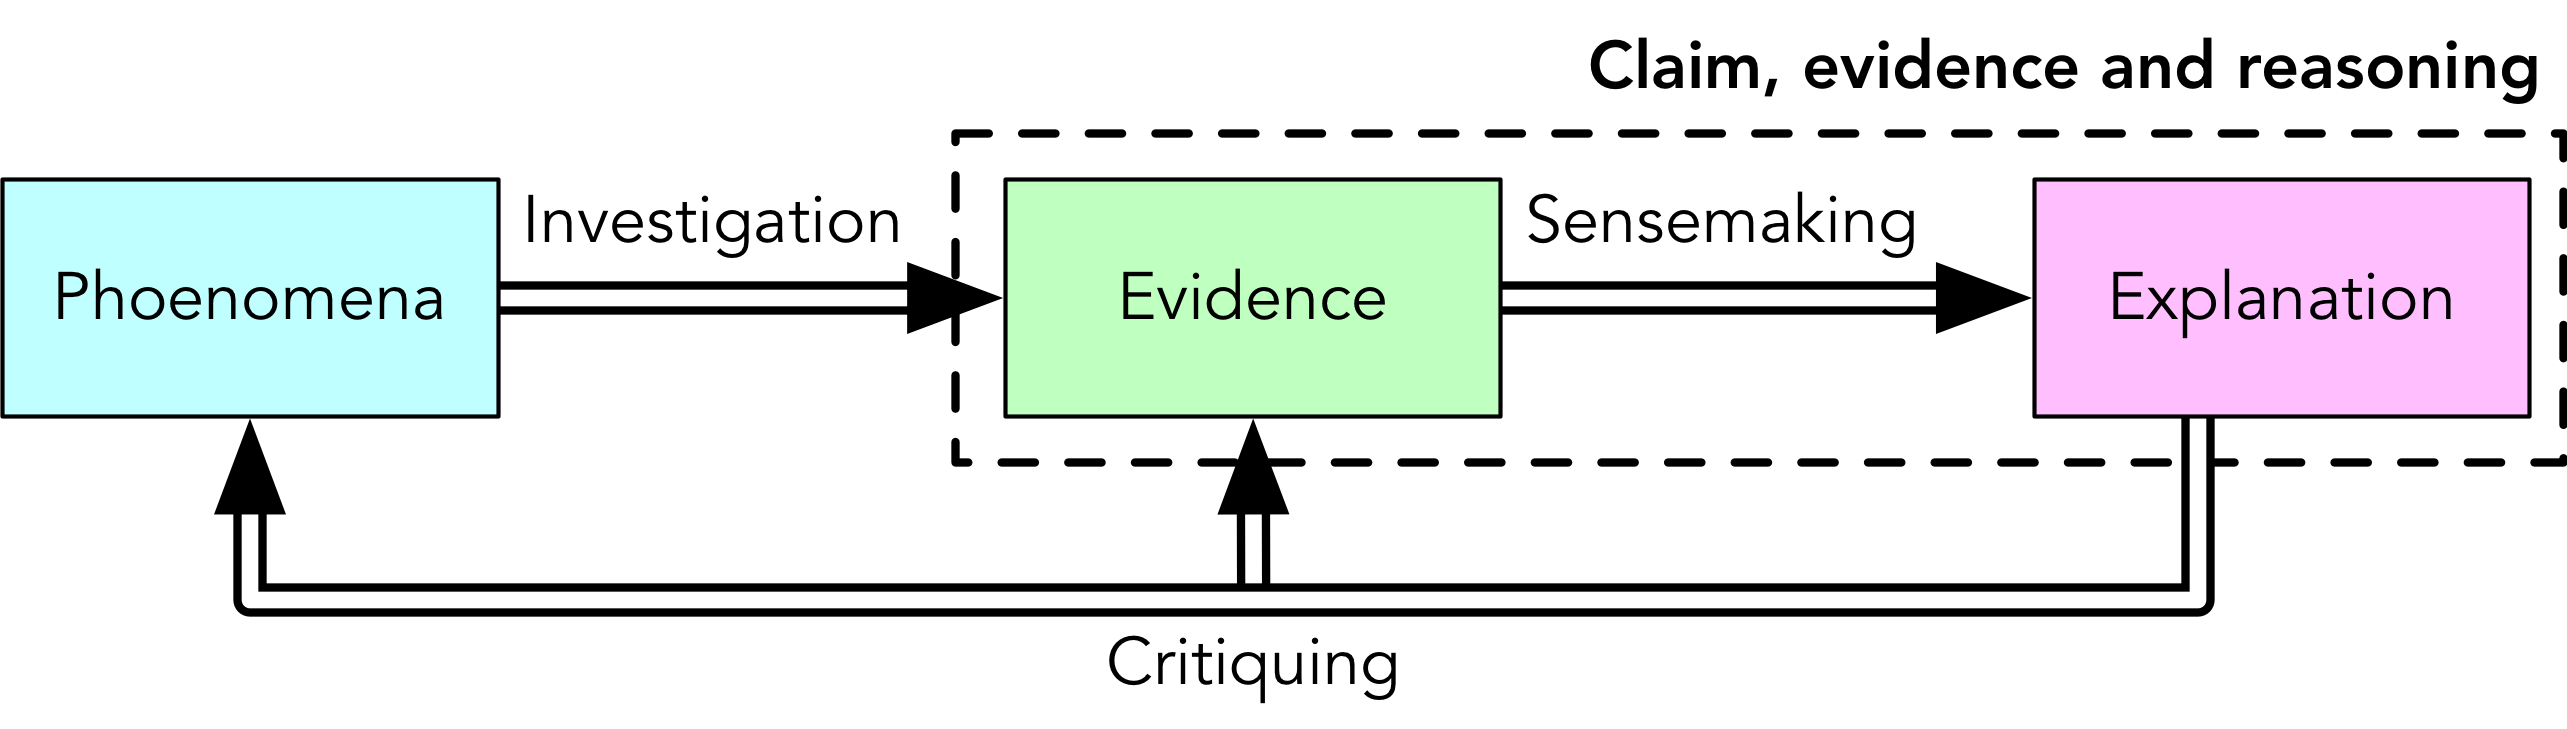 Claim-evidence-reasoning in the scientific enterprise